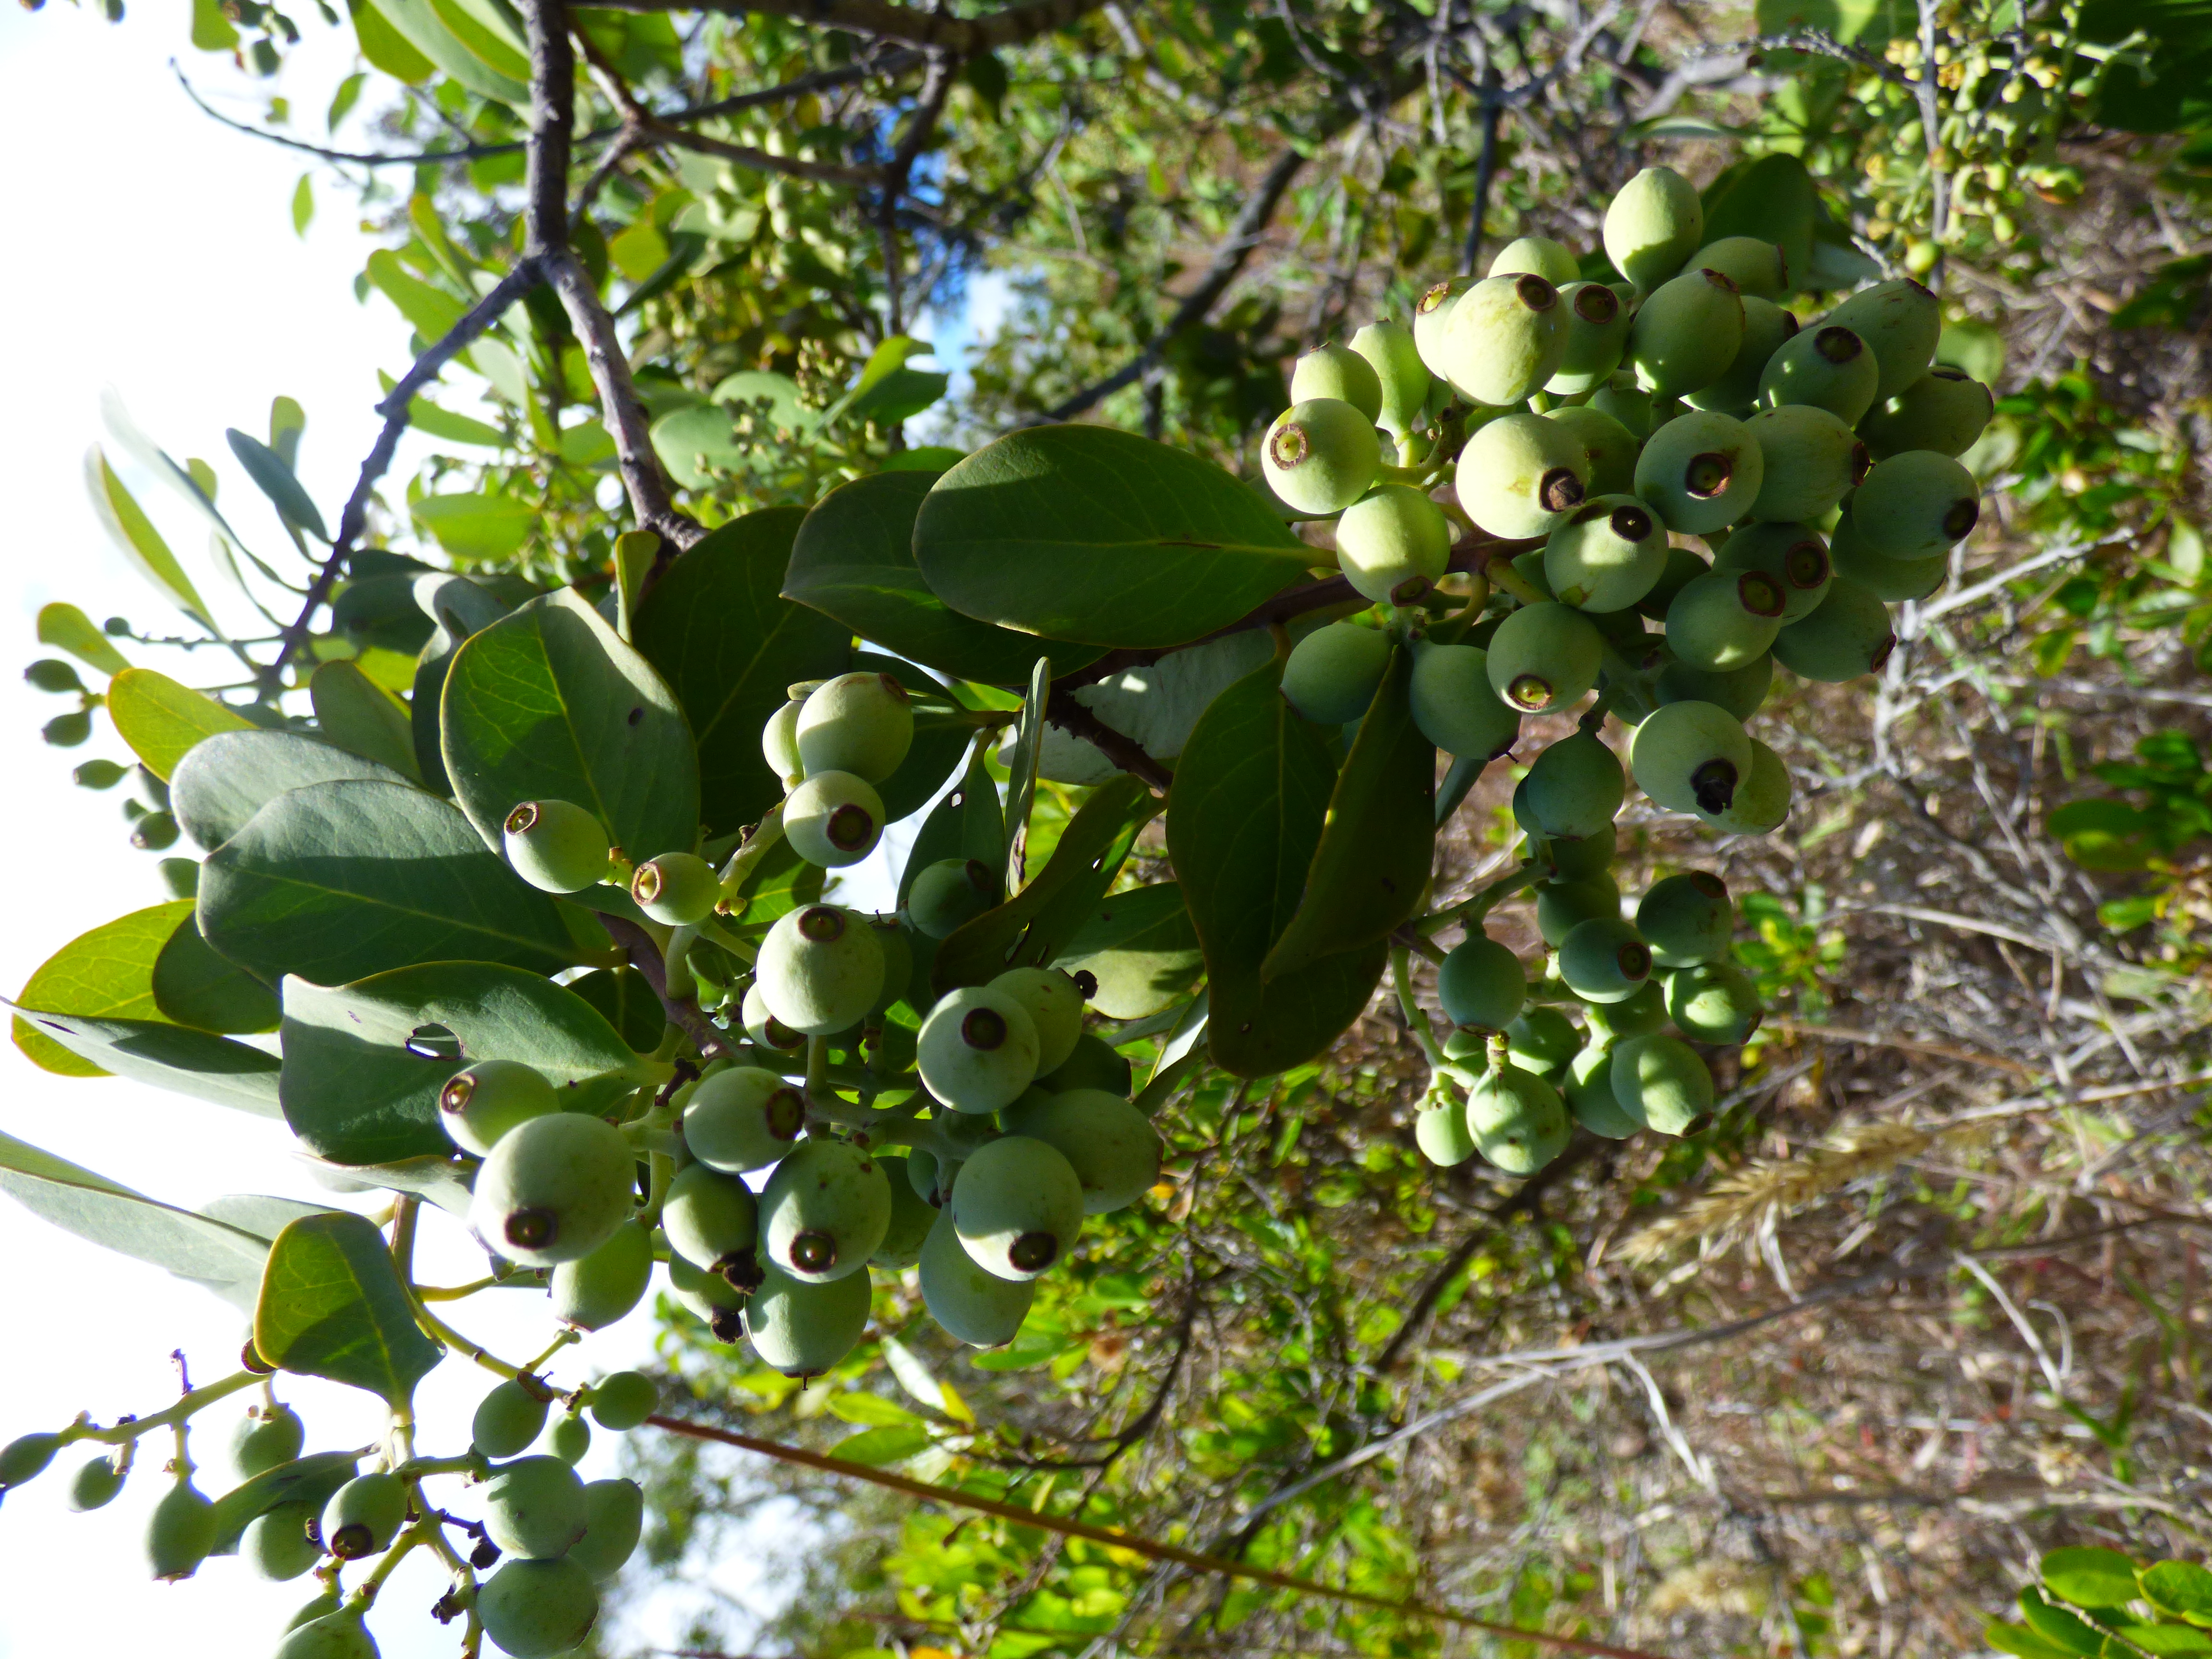 Organic Hawaiian Sandalwood ('iliahi) (Santalum Paniculatum) Pure Essential Oil, 10ml (w/1.6 Drop Cap)